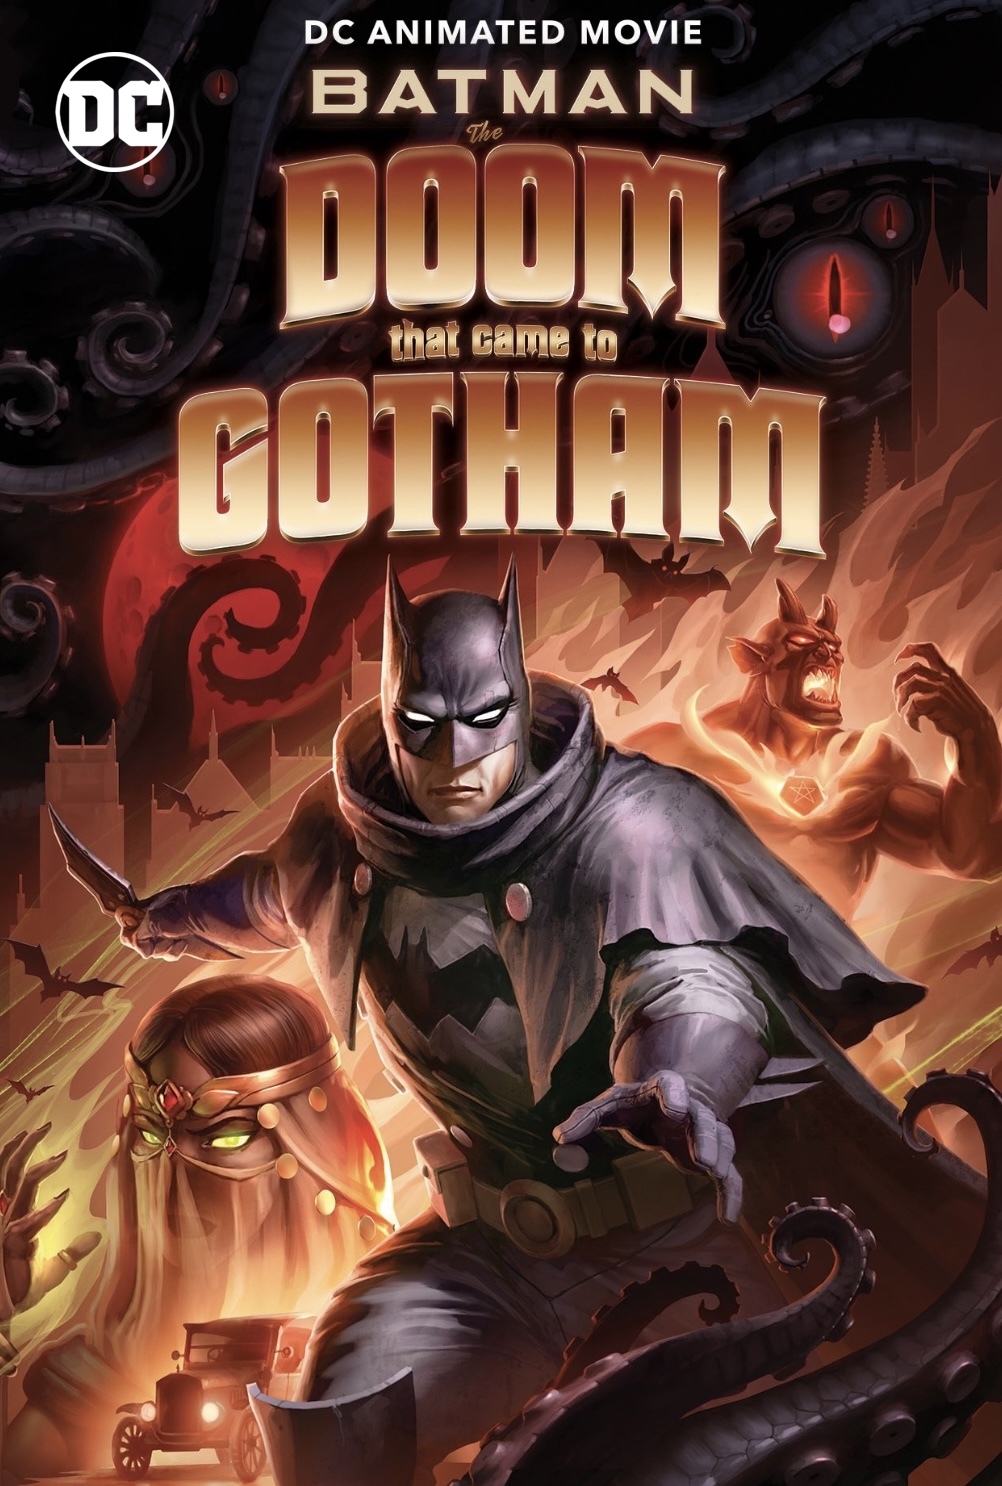 Batman: Gotham’a Gelen Kıyamet izle